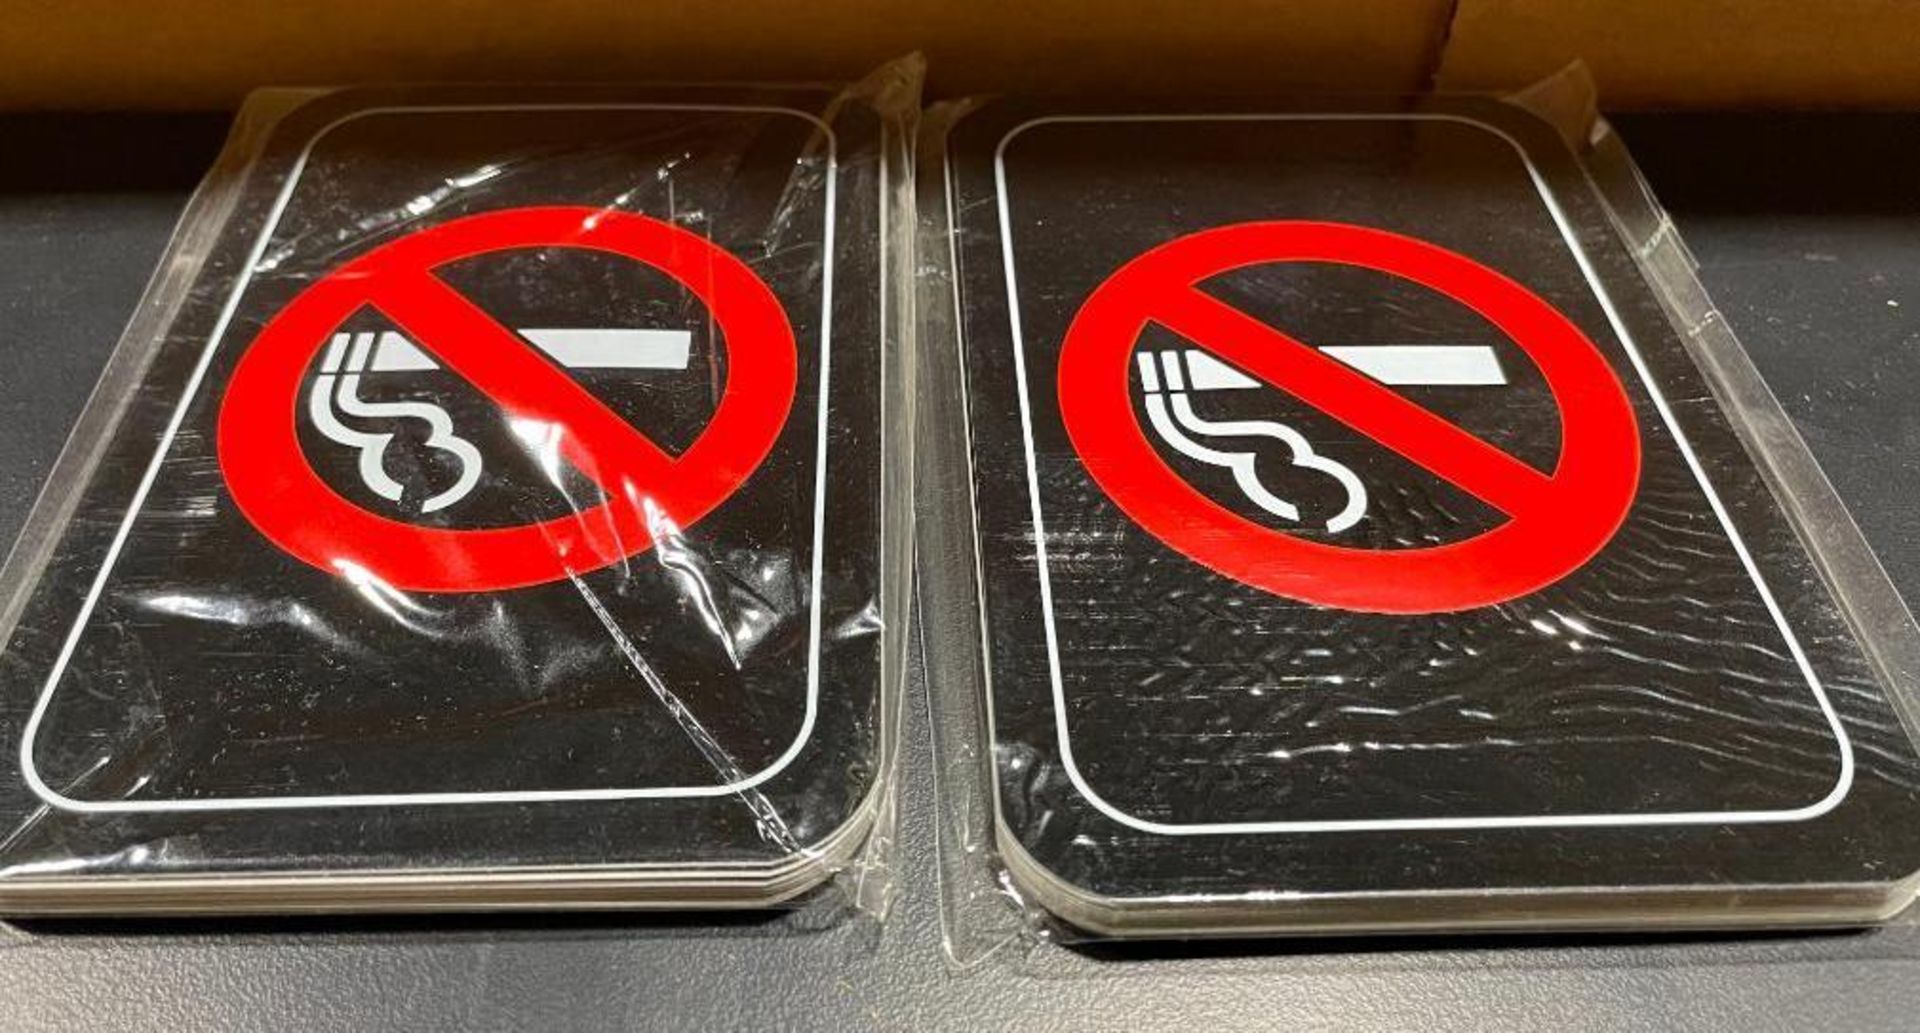 (2) PACKS OF NO SMOKING SIGNS - JOHNSON ROSE 80305 - NEW - Image 2 of 2